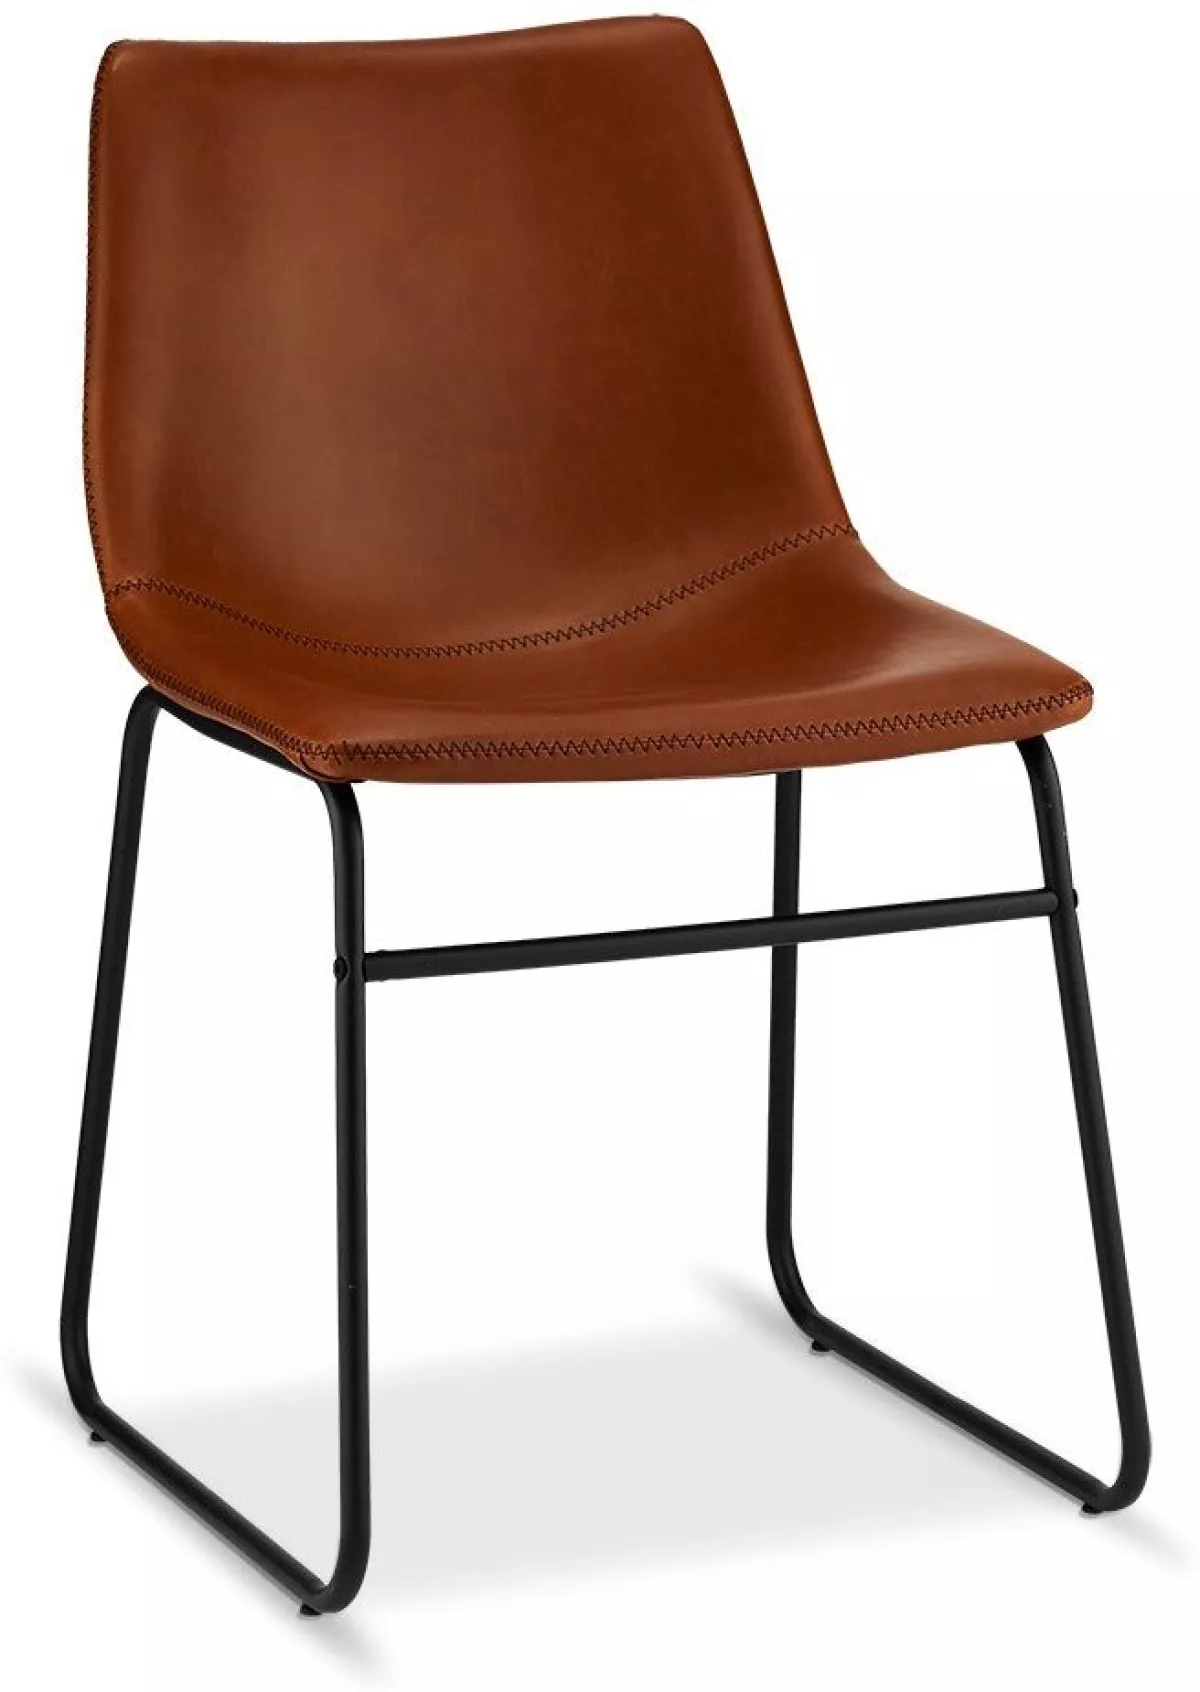 #3 - Kelso, Spisebordsstol, PU-læder med syninger by Raymond & Hallmark (H: 78 cm. B: 46 cm. L: 54 cm., Brun)